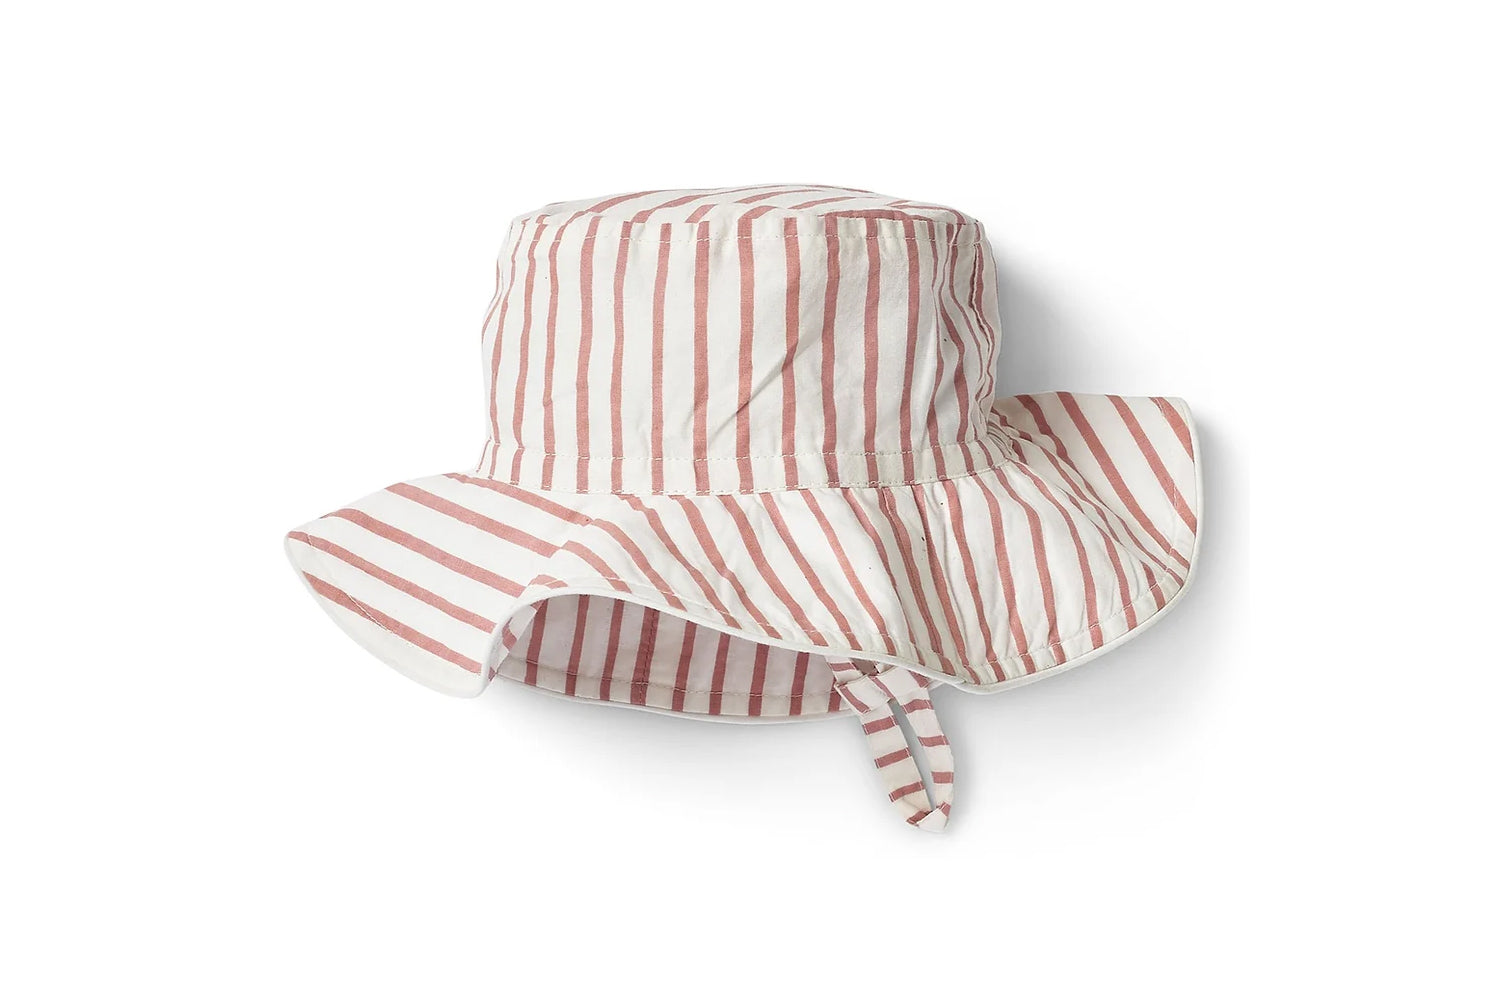 pehr stripes away dark pink bucket hat